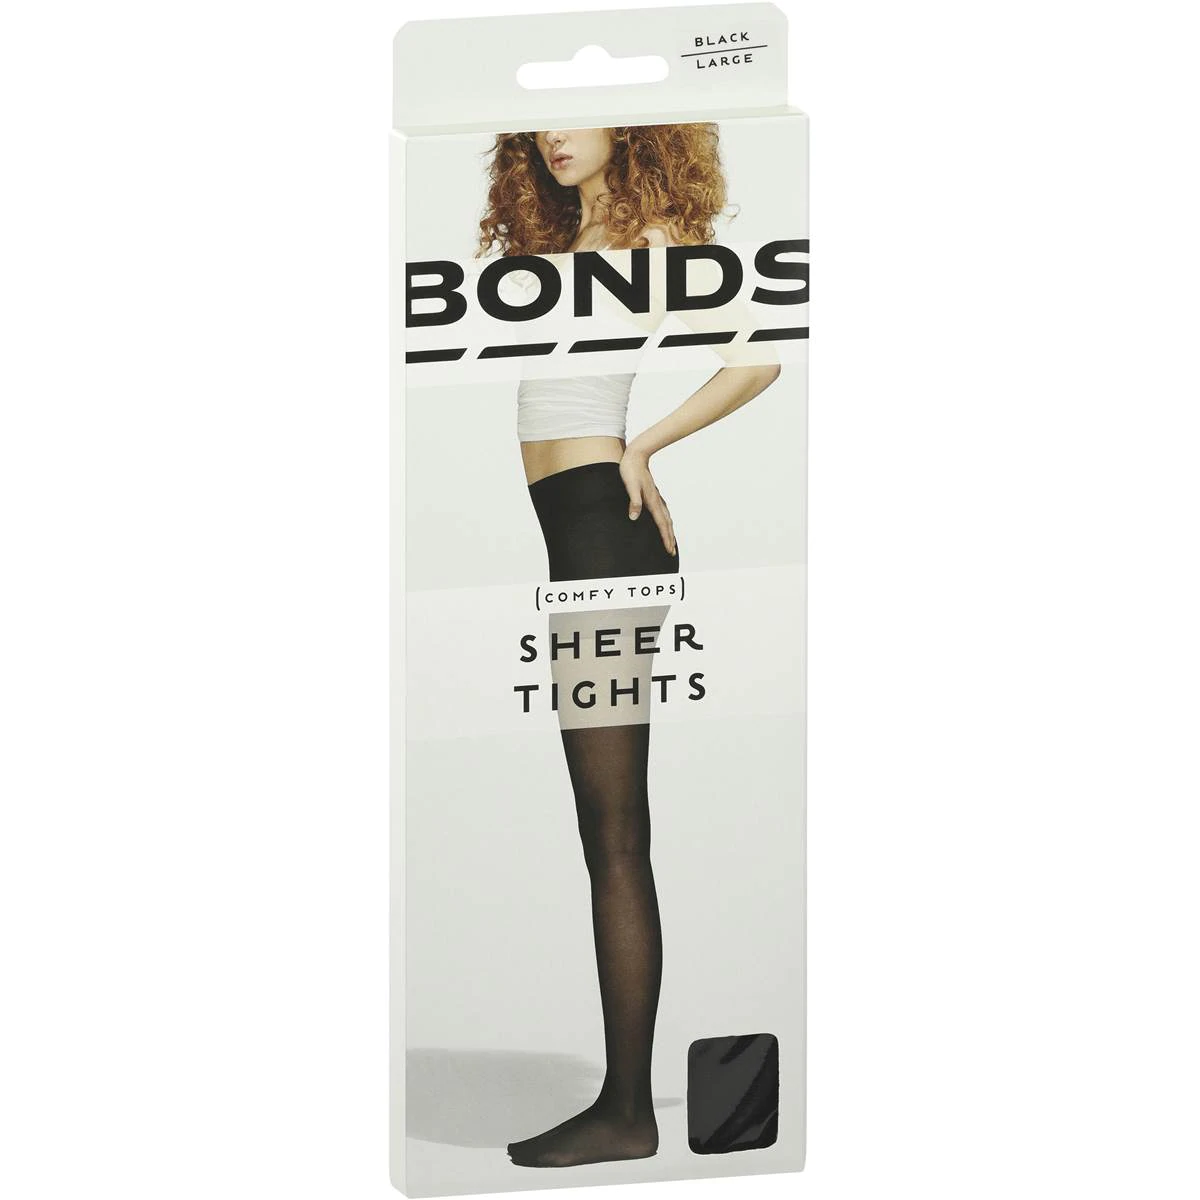 Bonds Comfy Tops Sheer Tights 15D Black Large